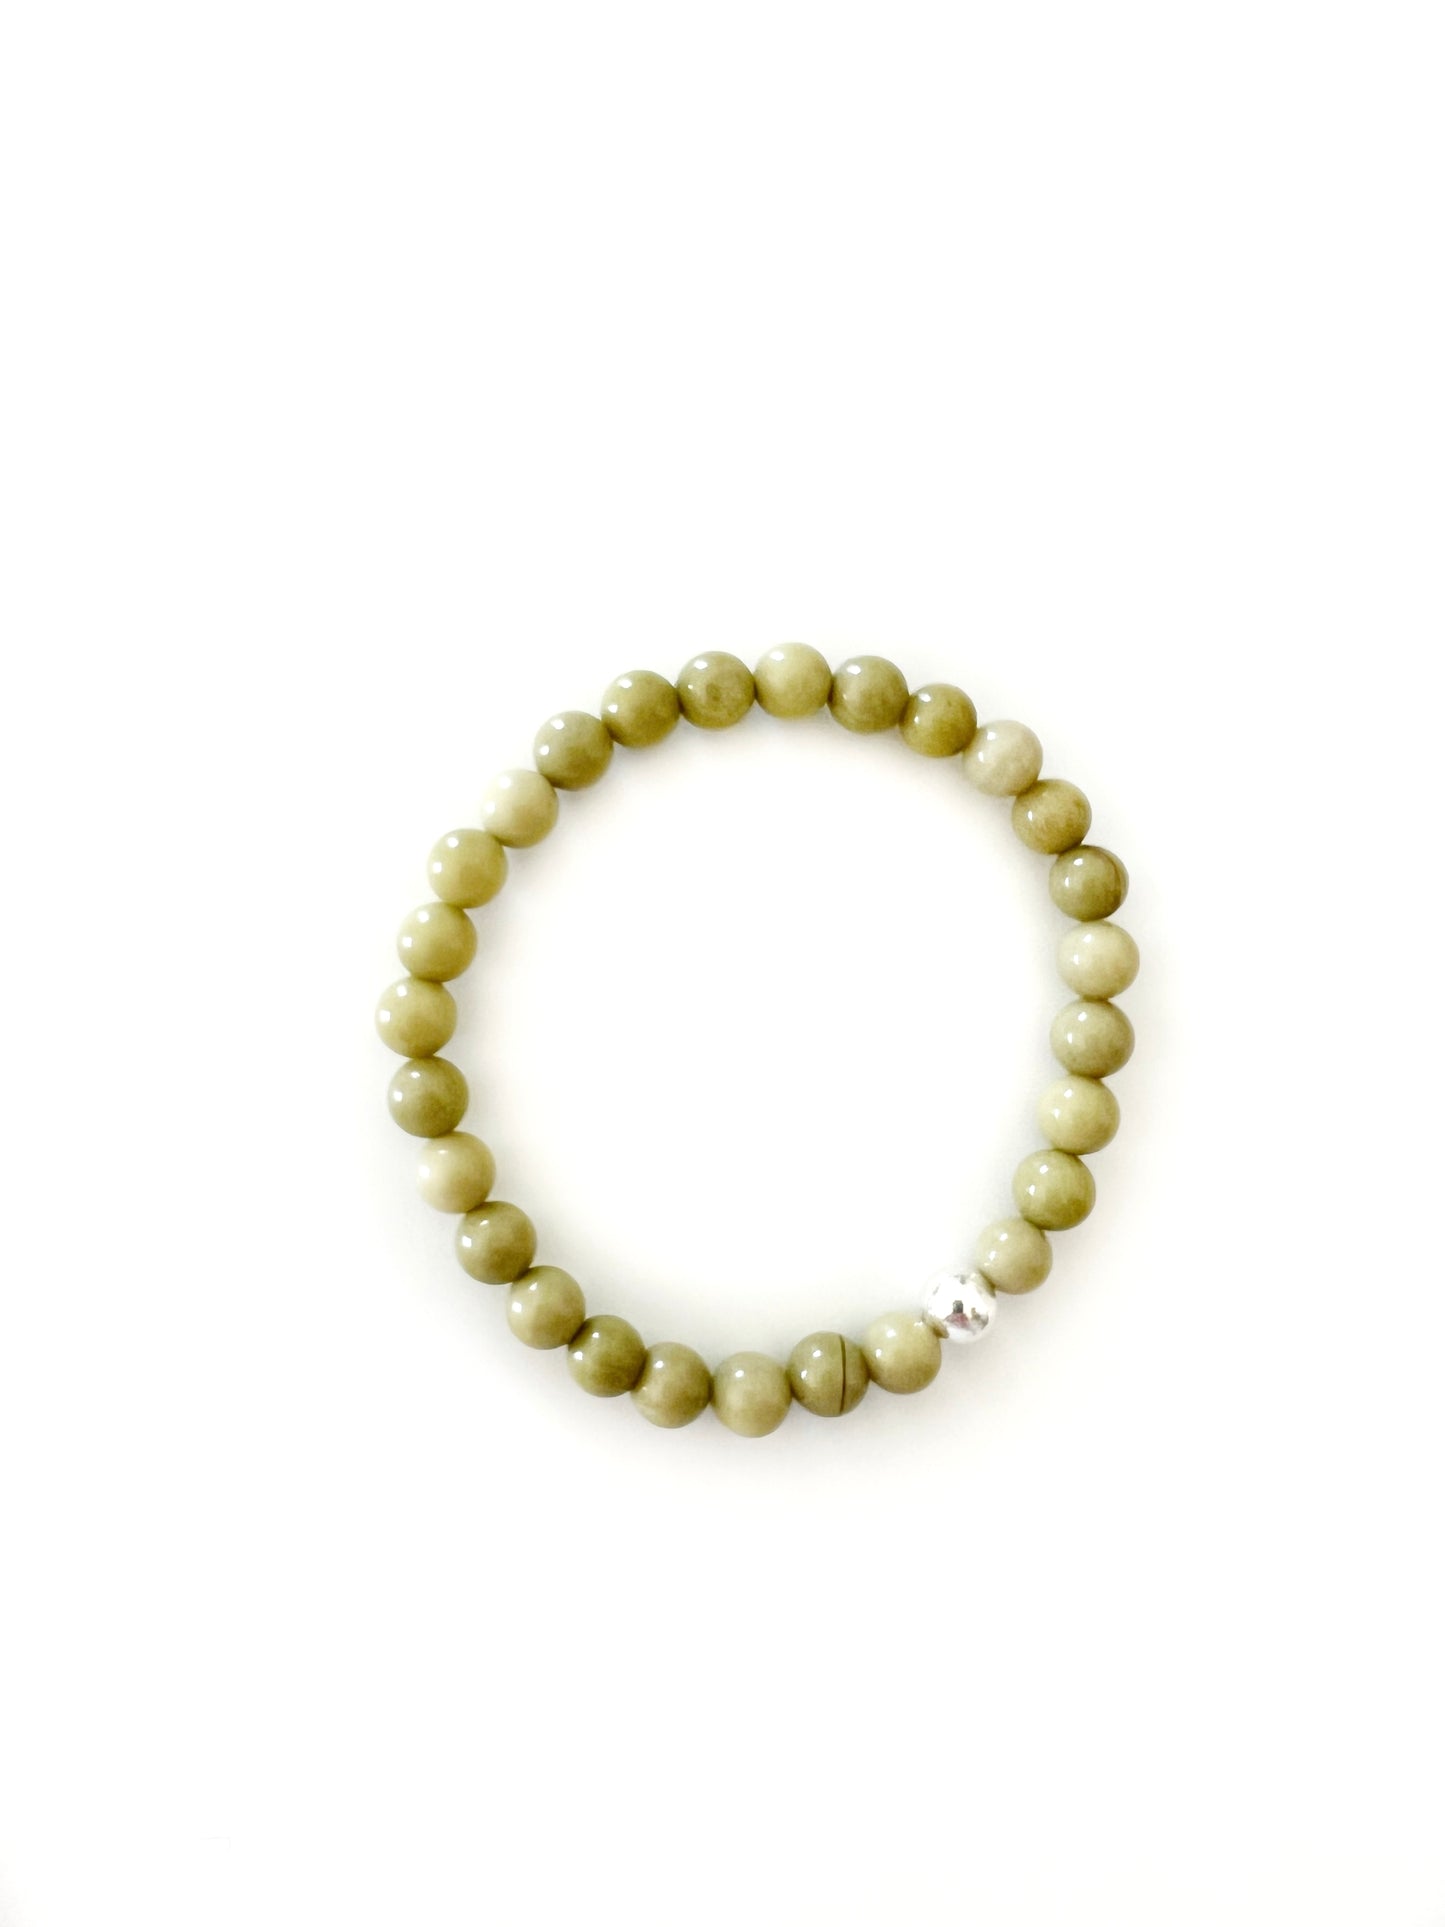 Avocado Jasper stretch bracelet with one sterling silver bead on a white background